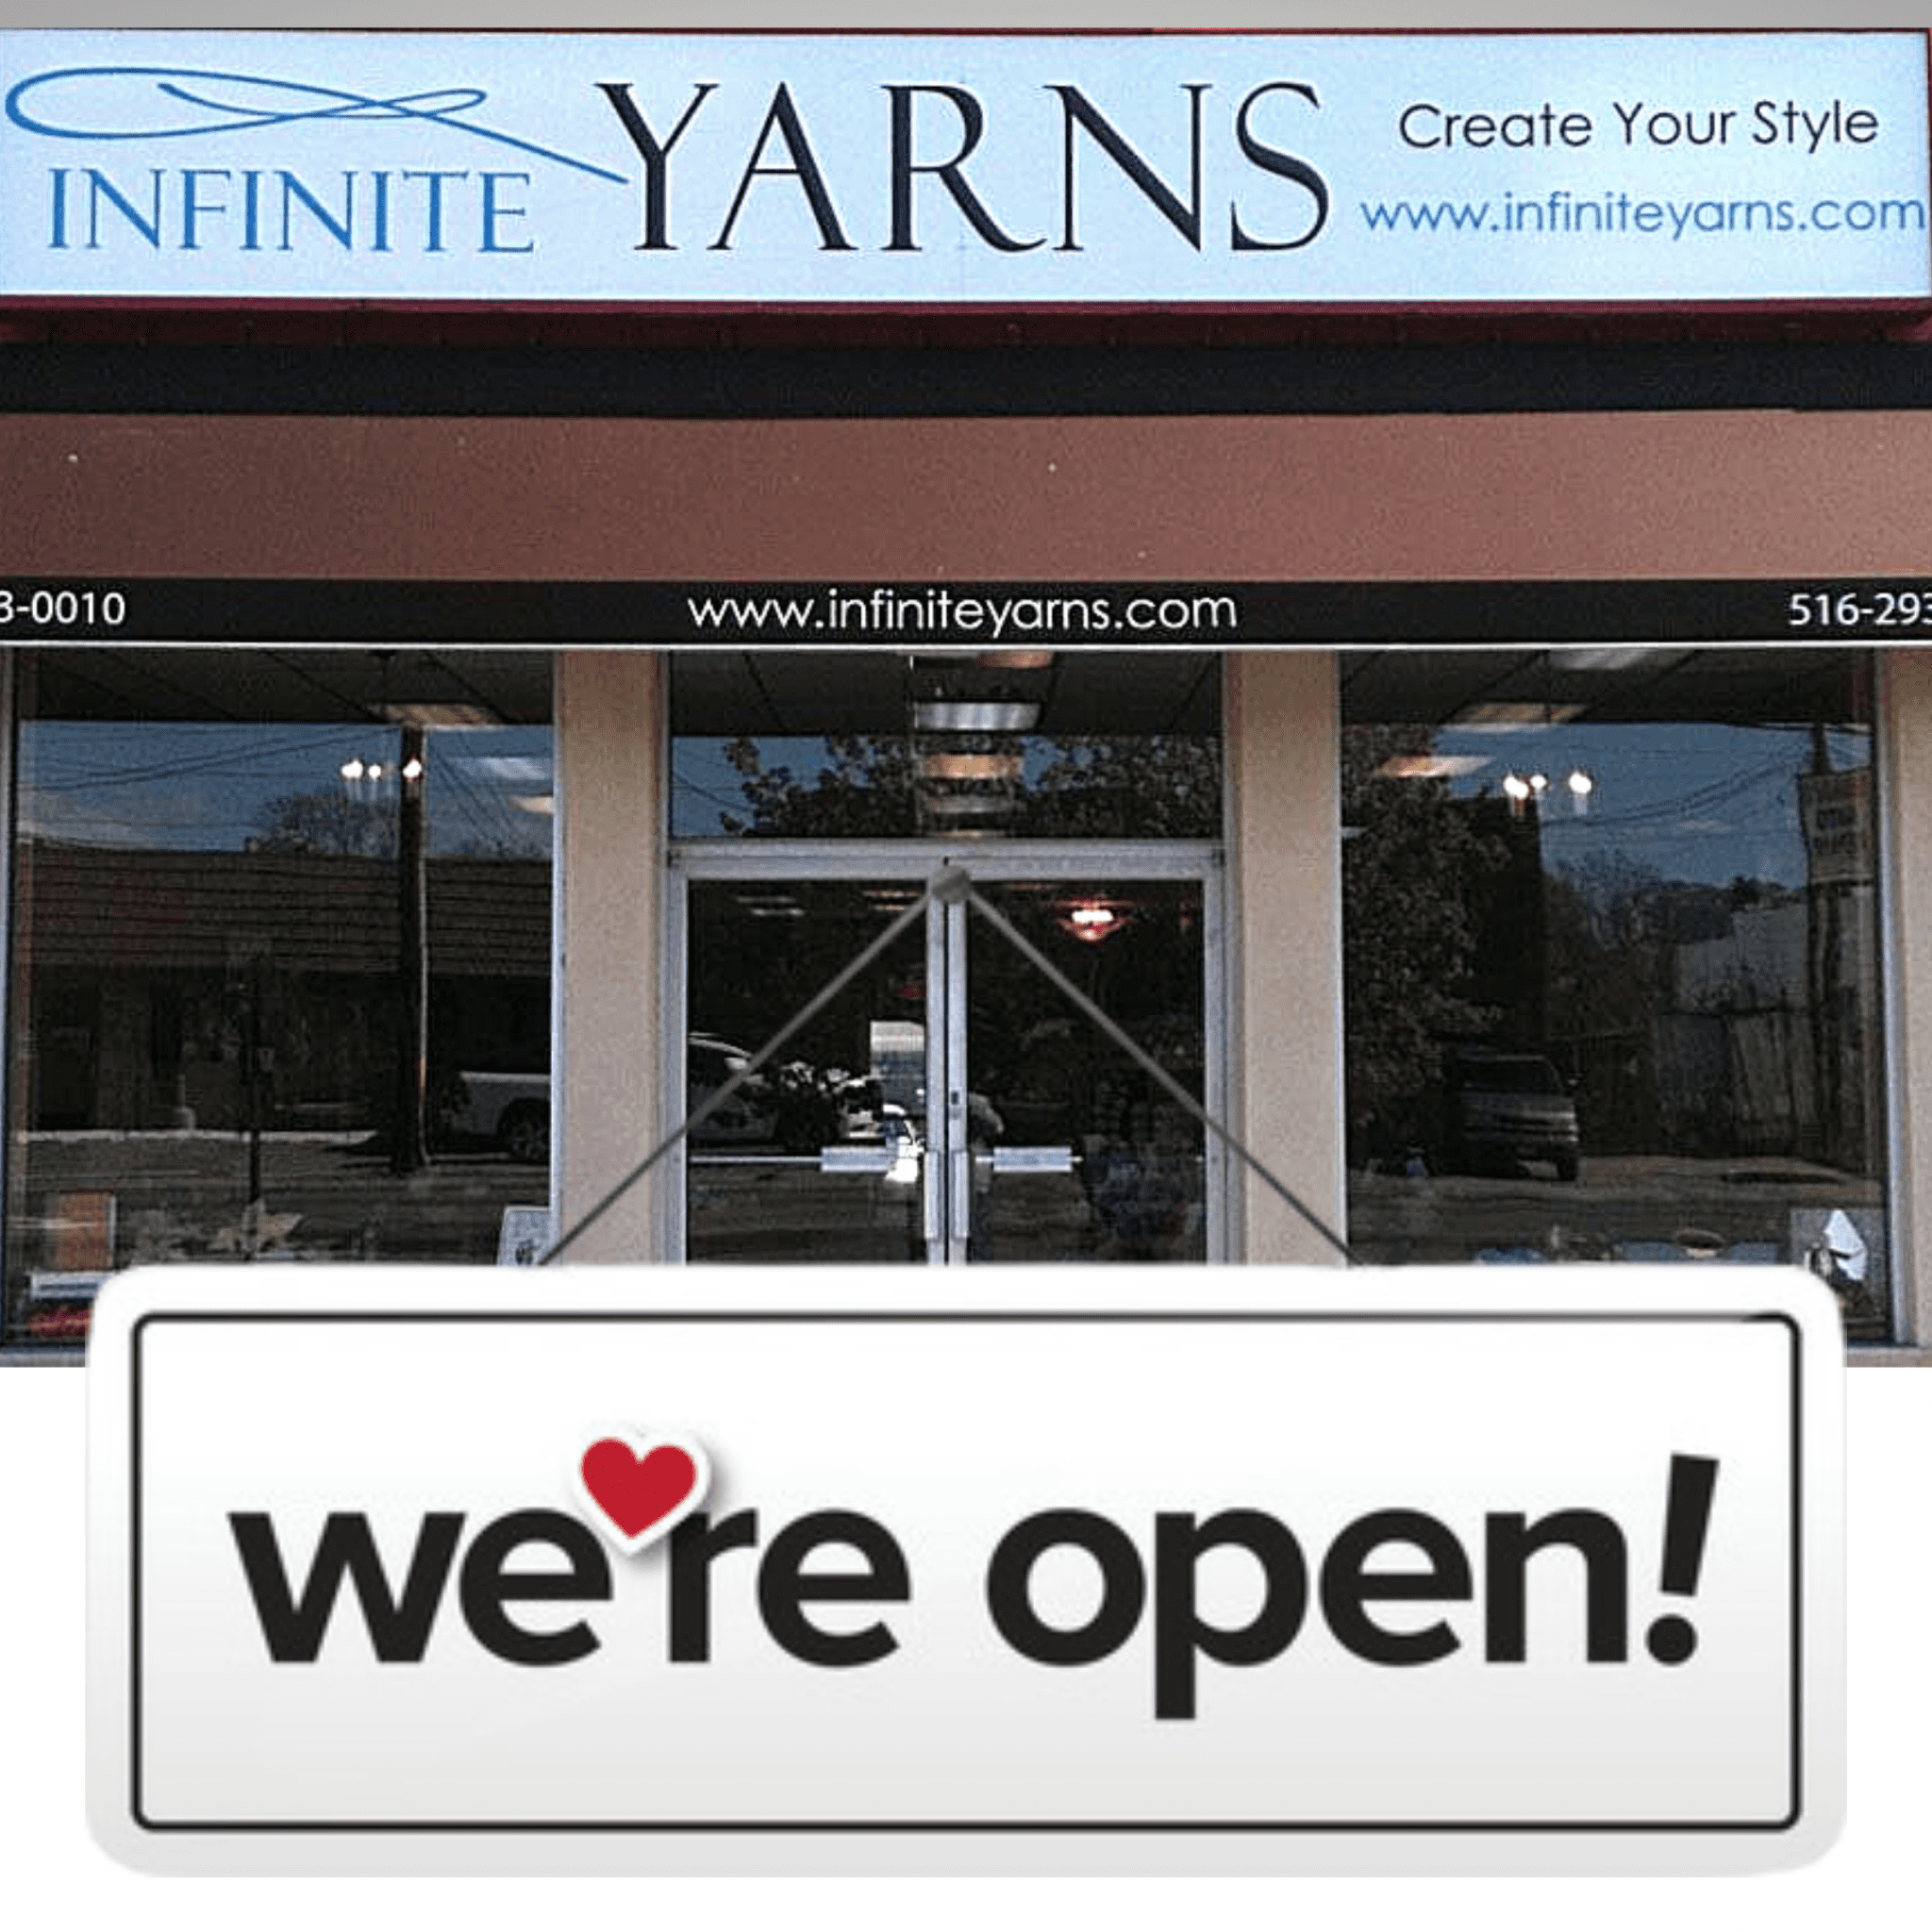 Infinite Yarns Reopens